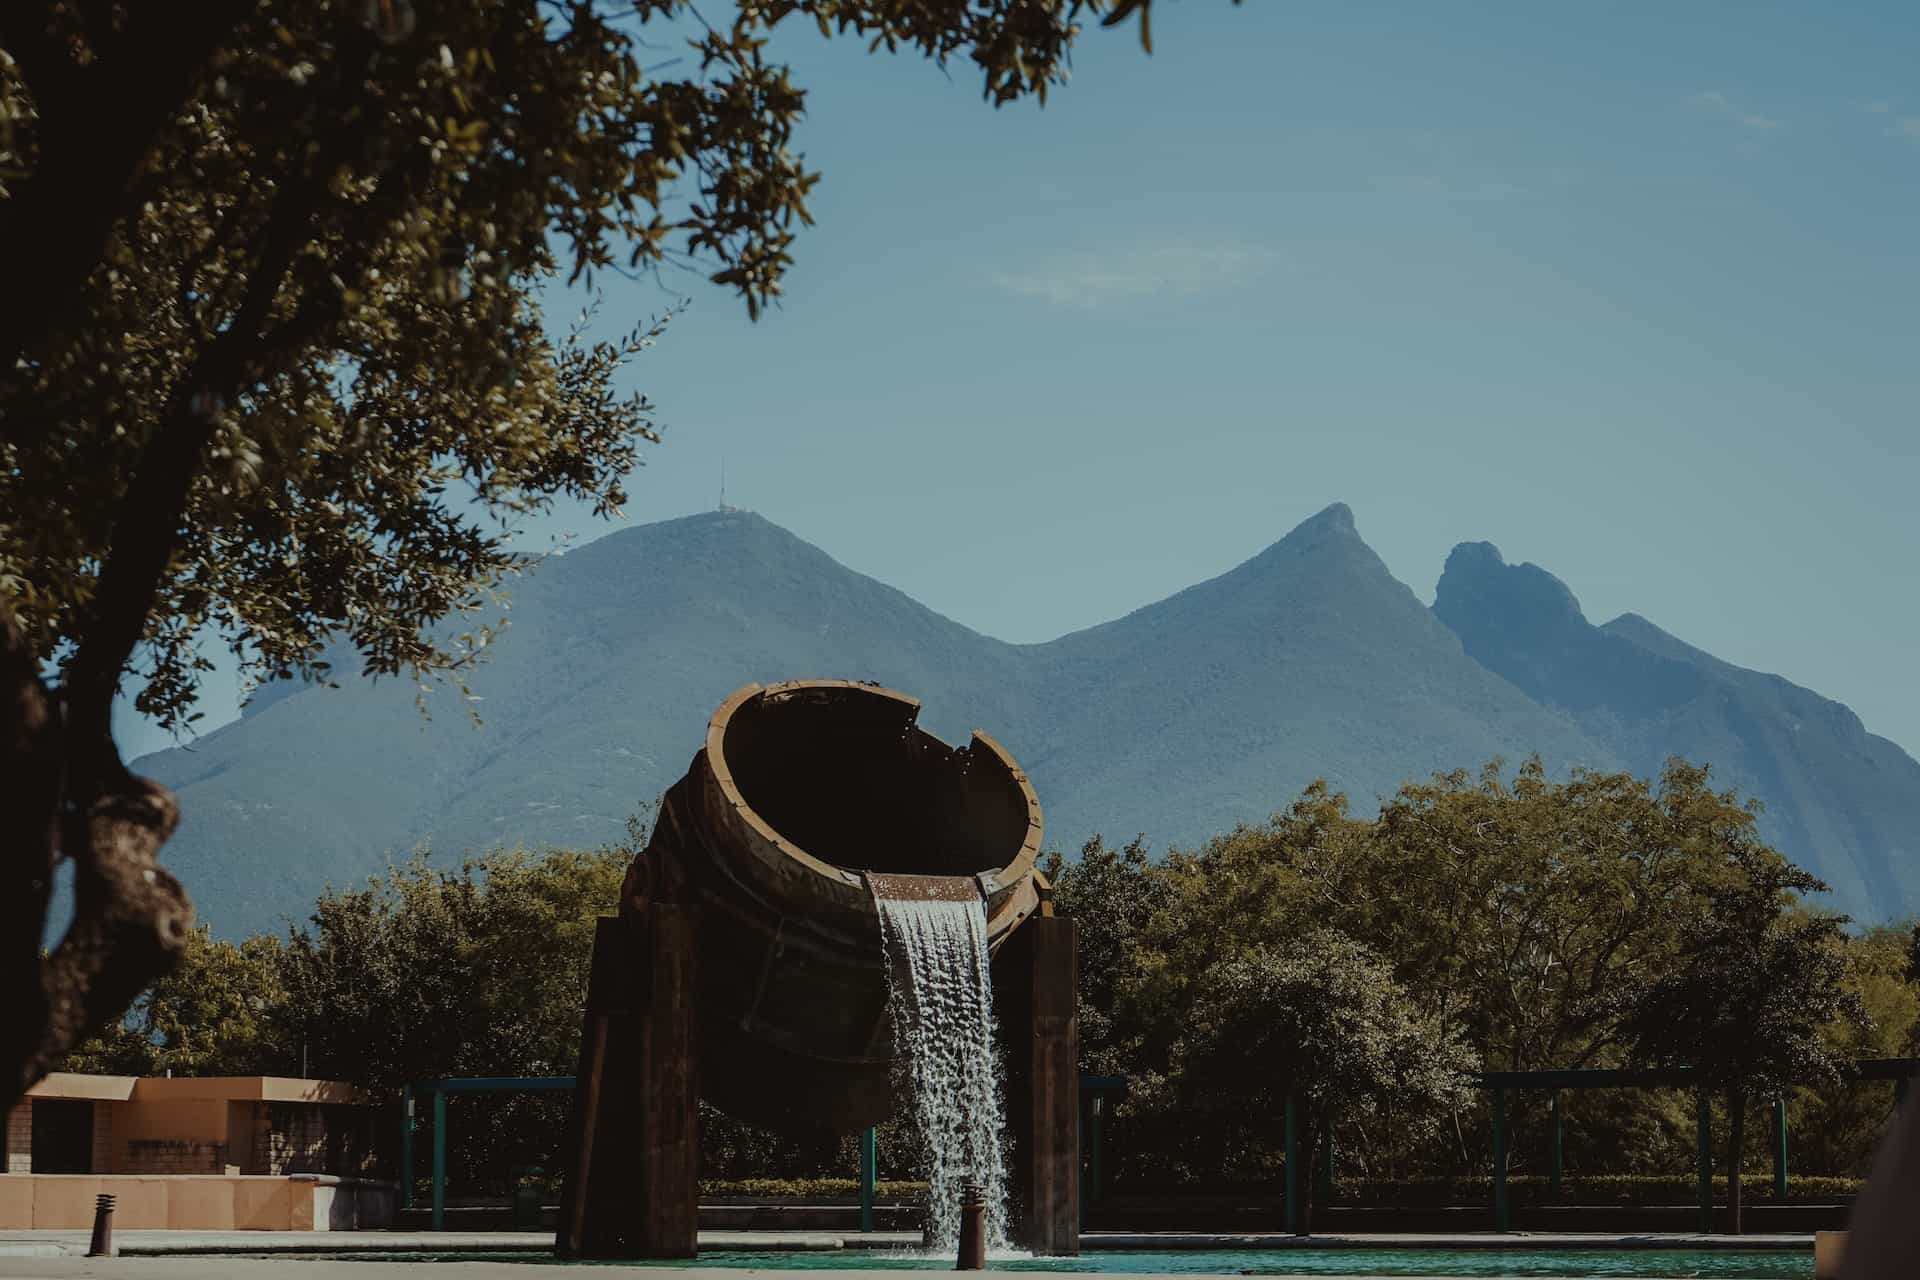 Best things to do in Monterrey Mexico - Esteban Gutierrez - Paseo Santa Lucía by Cande Westh on Unsplash